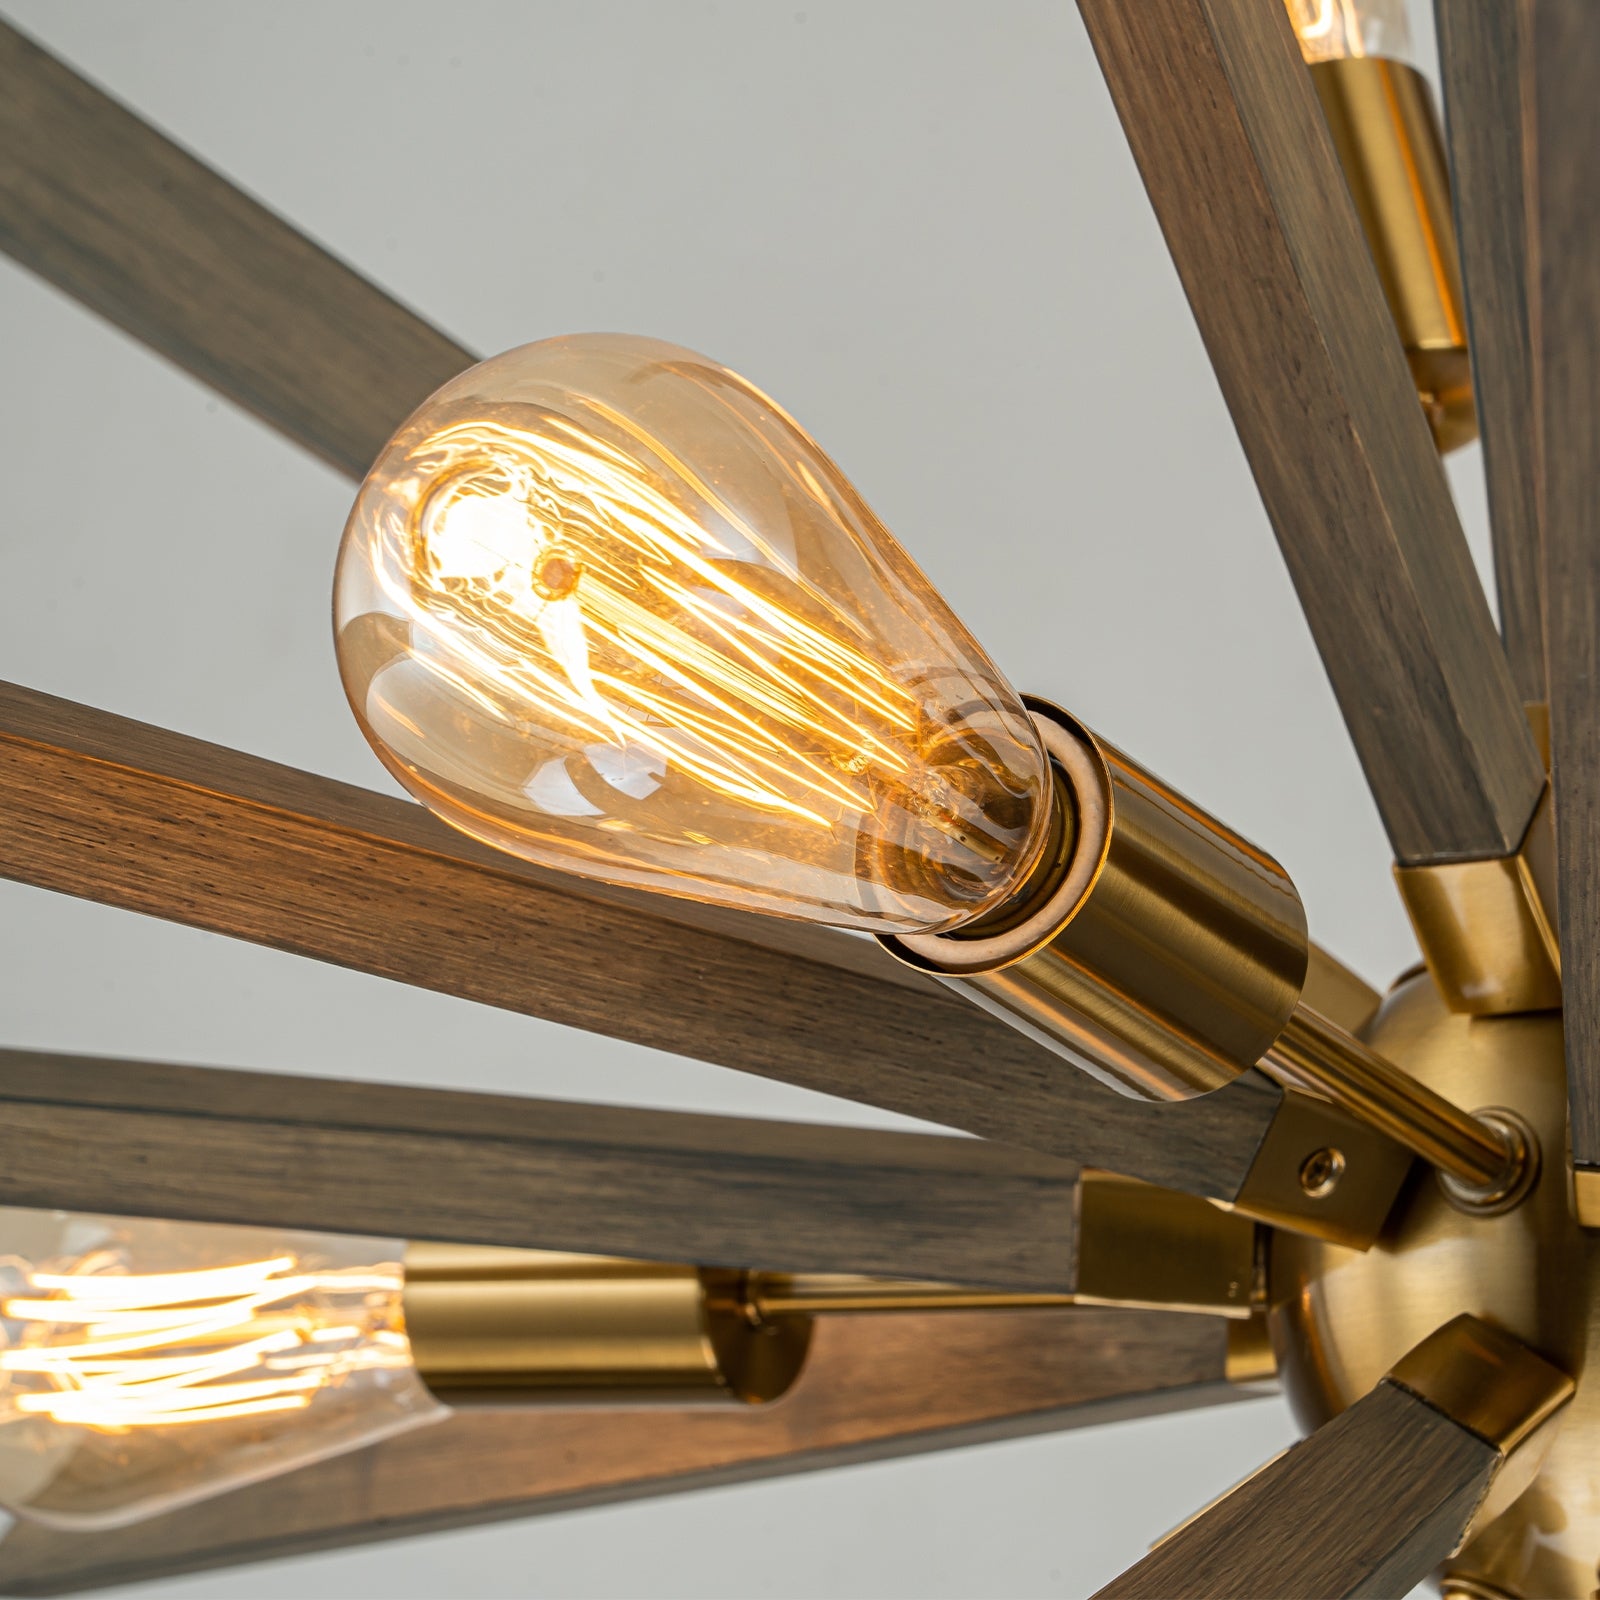 Glowings 8-Light Mid-Century Wooden Waldorf Sputnik Sphere Chandelier